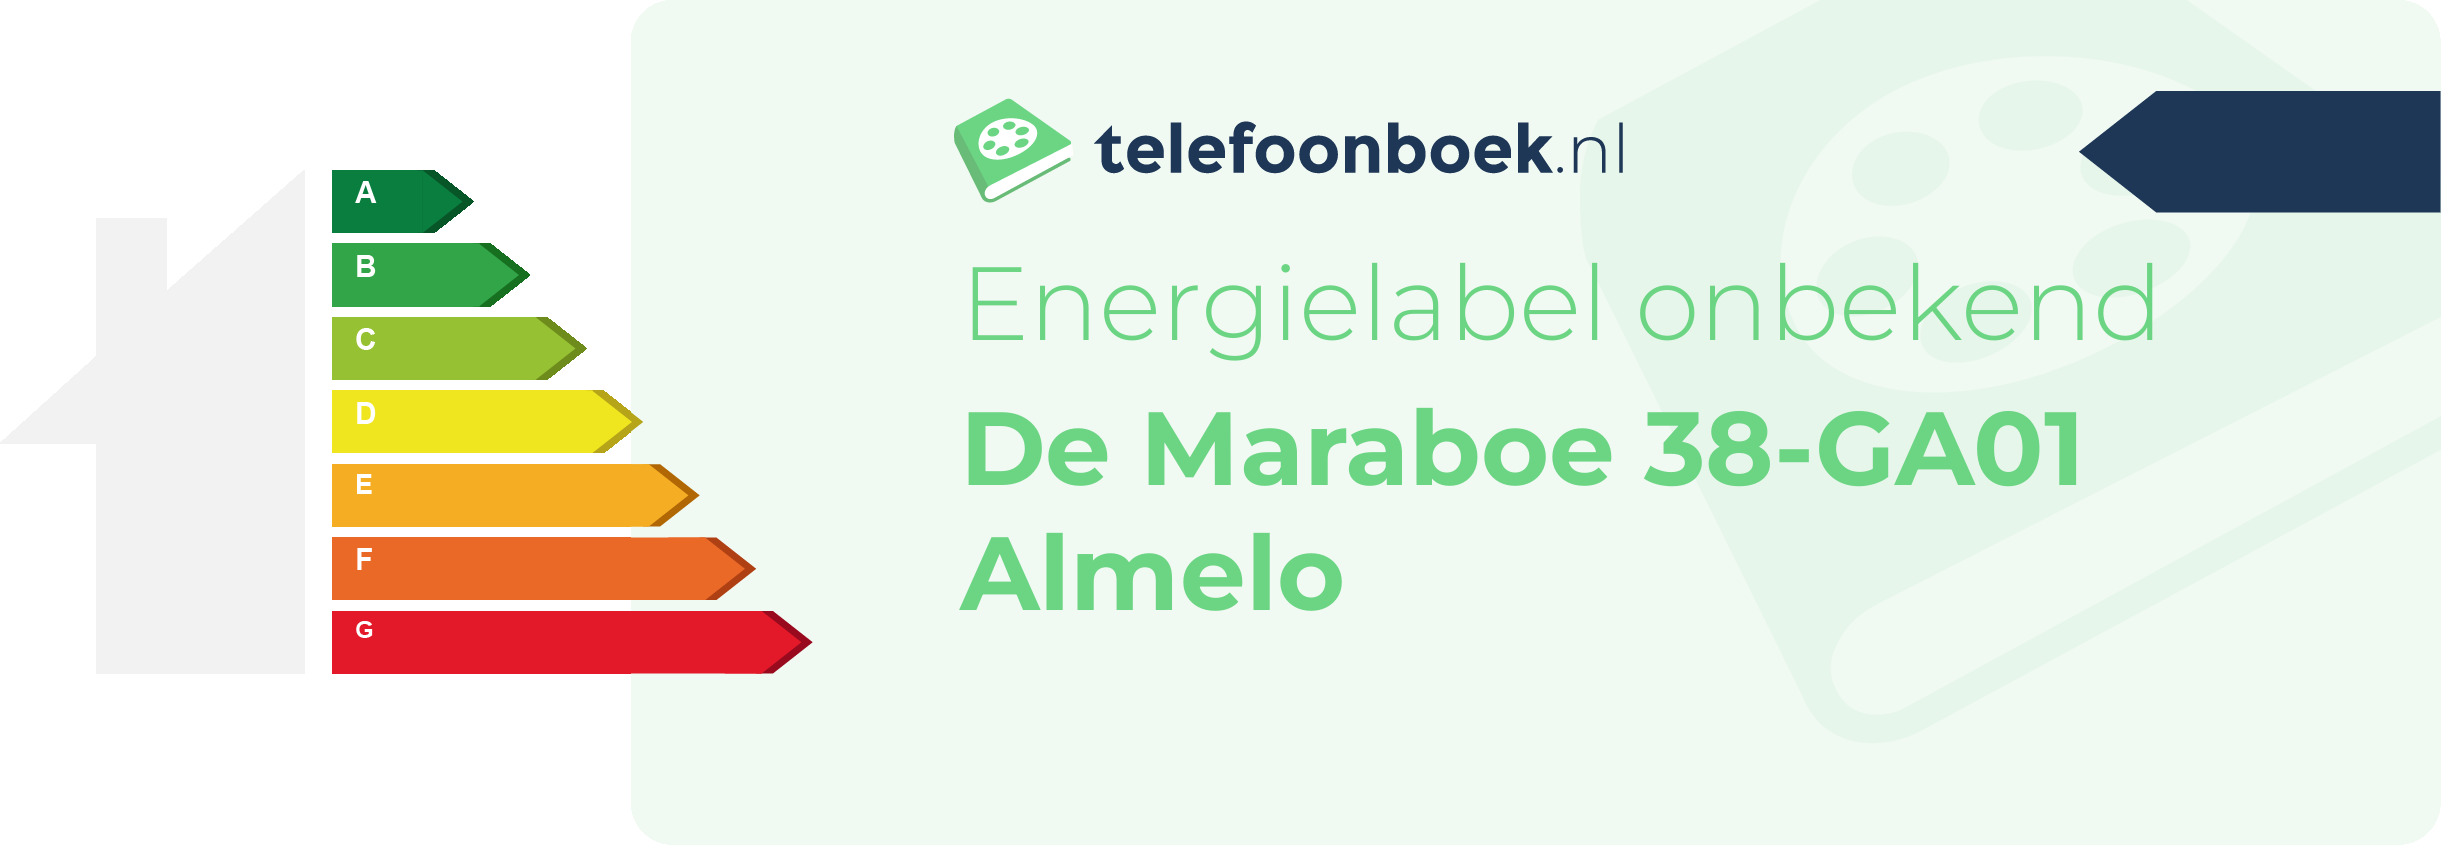 Energielabel De Maraboe 38-GA01 Almelo